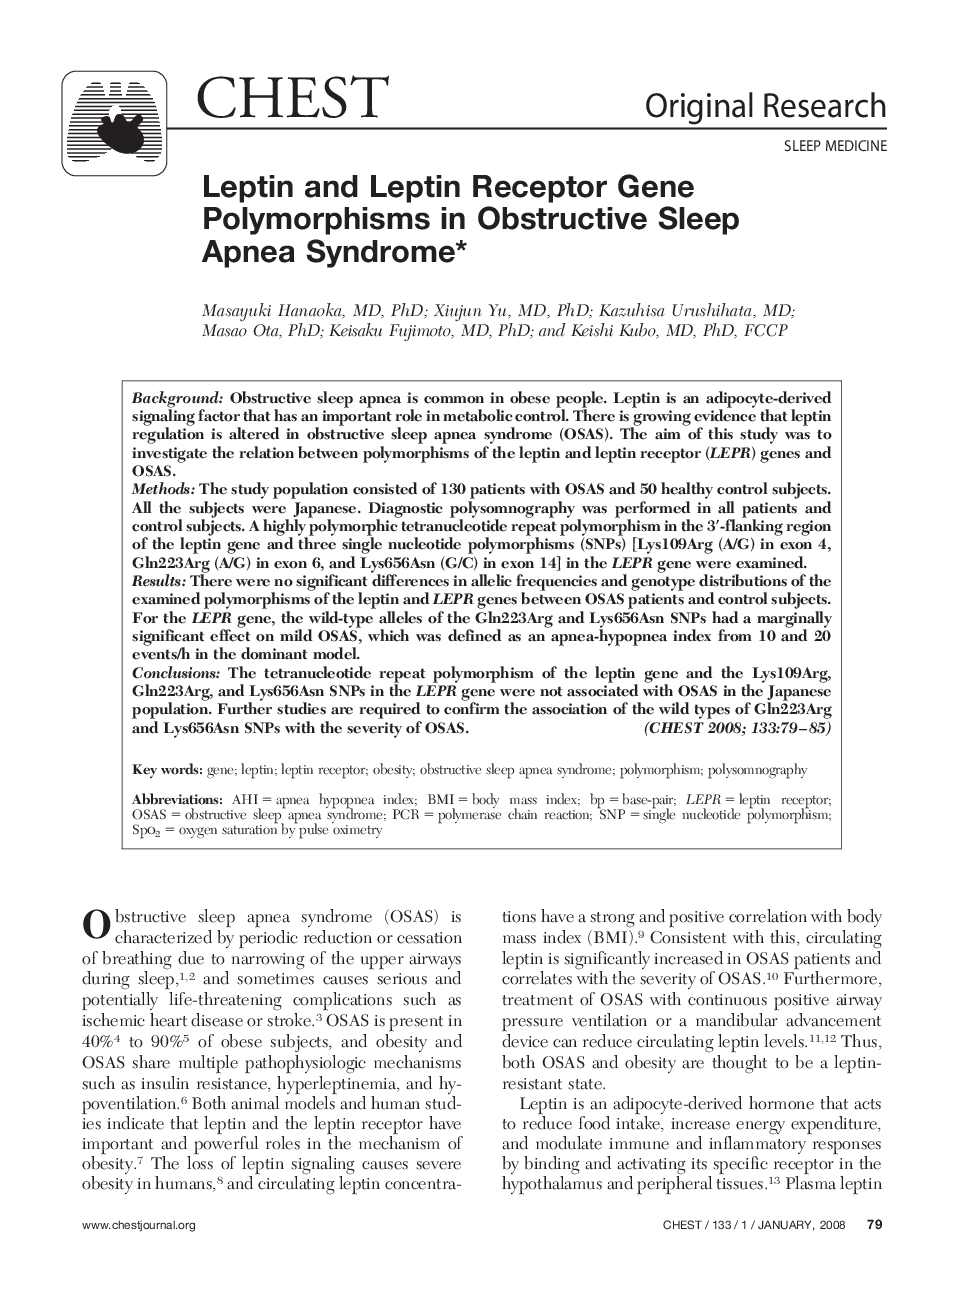 Leptin and Leptin Receptor Gene Polymorphisms in Obstructive Sleep Apnea Syndrome 